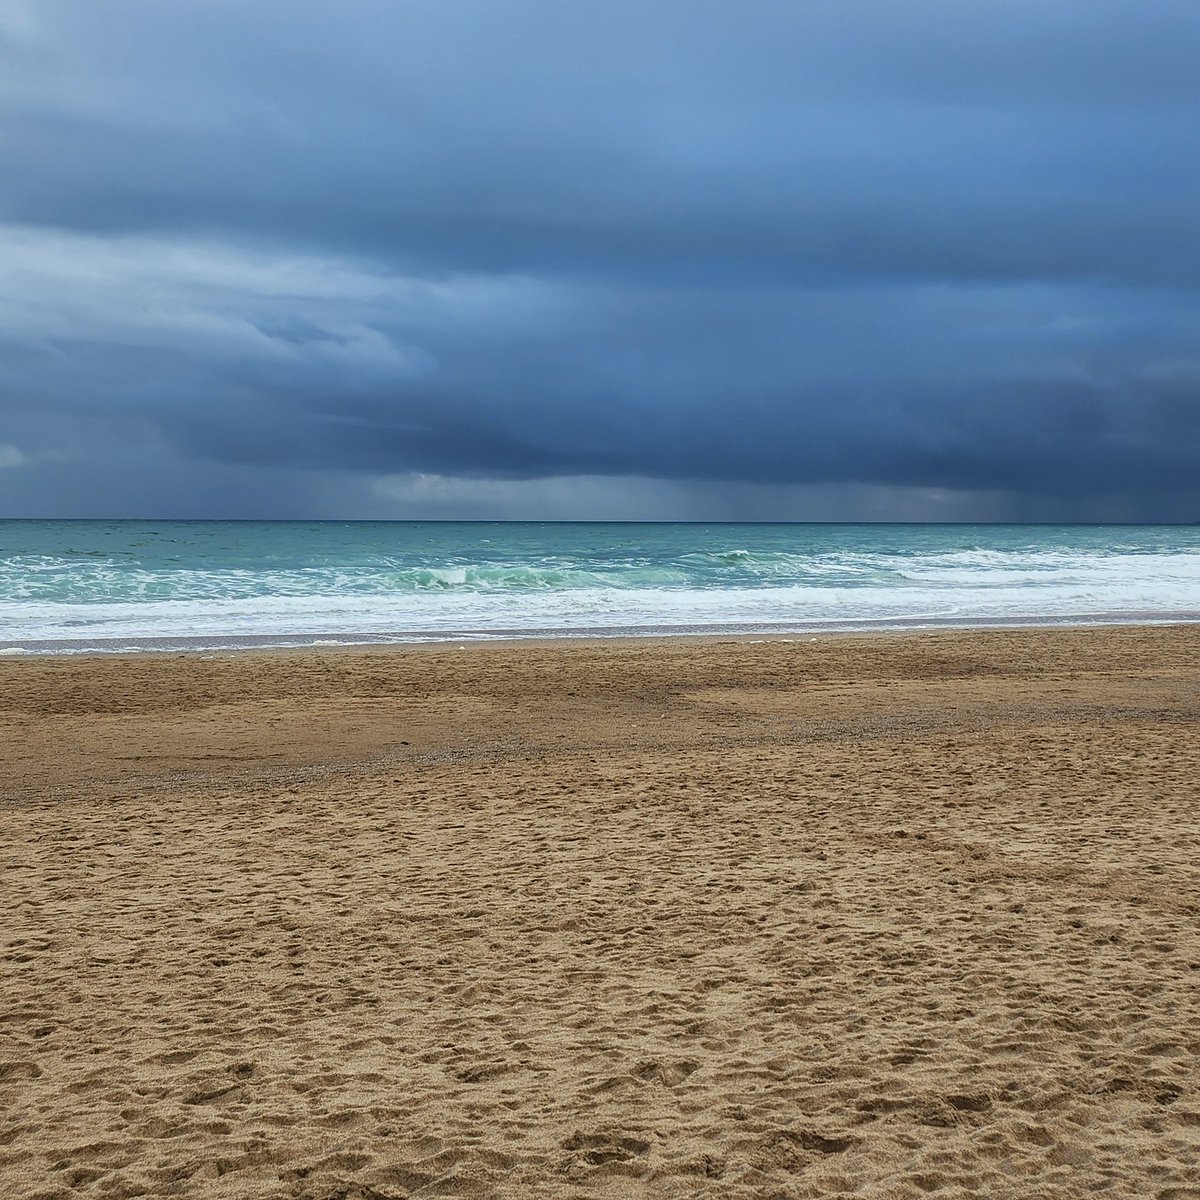 SW Cornwall looking pretty dramatic this evening. I love those ominous skies... @Gaiinz @MrsVeriTea 🖤🩶💙🩶🖤